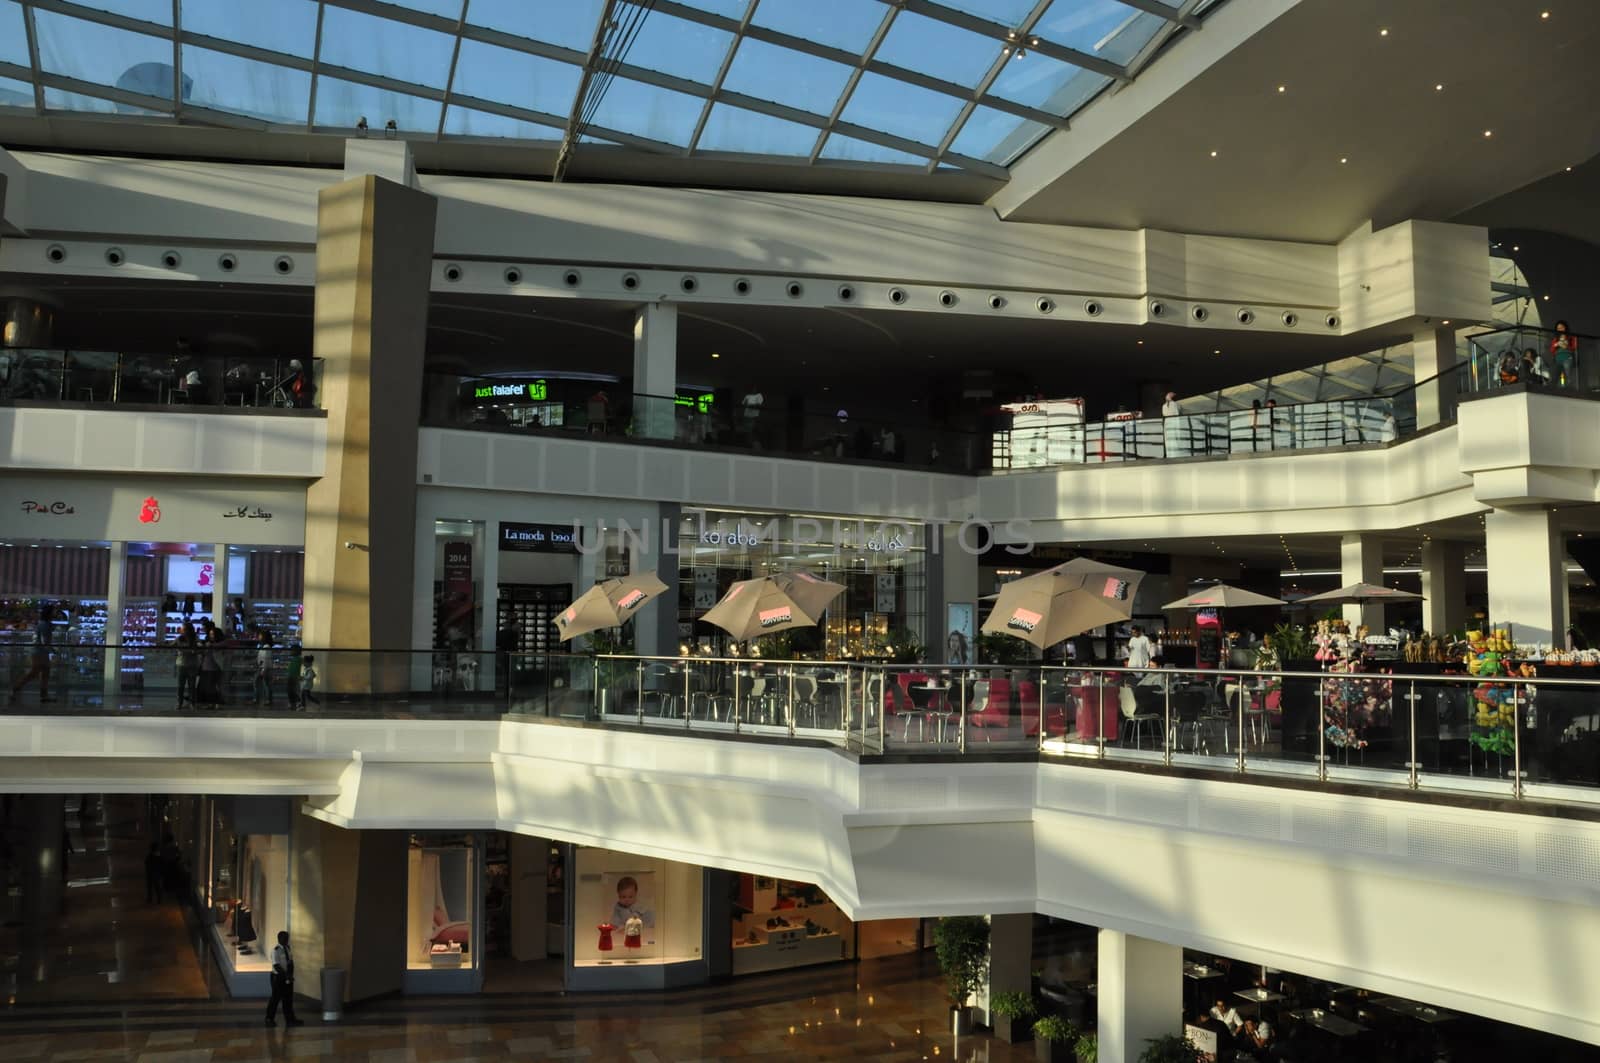 Festival Centre Mall in Dubai, UAE by sainaniritu